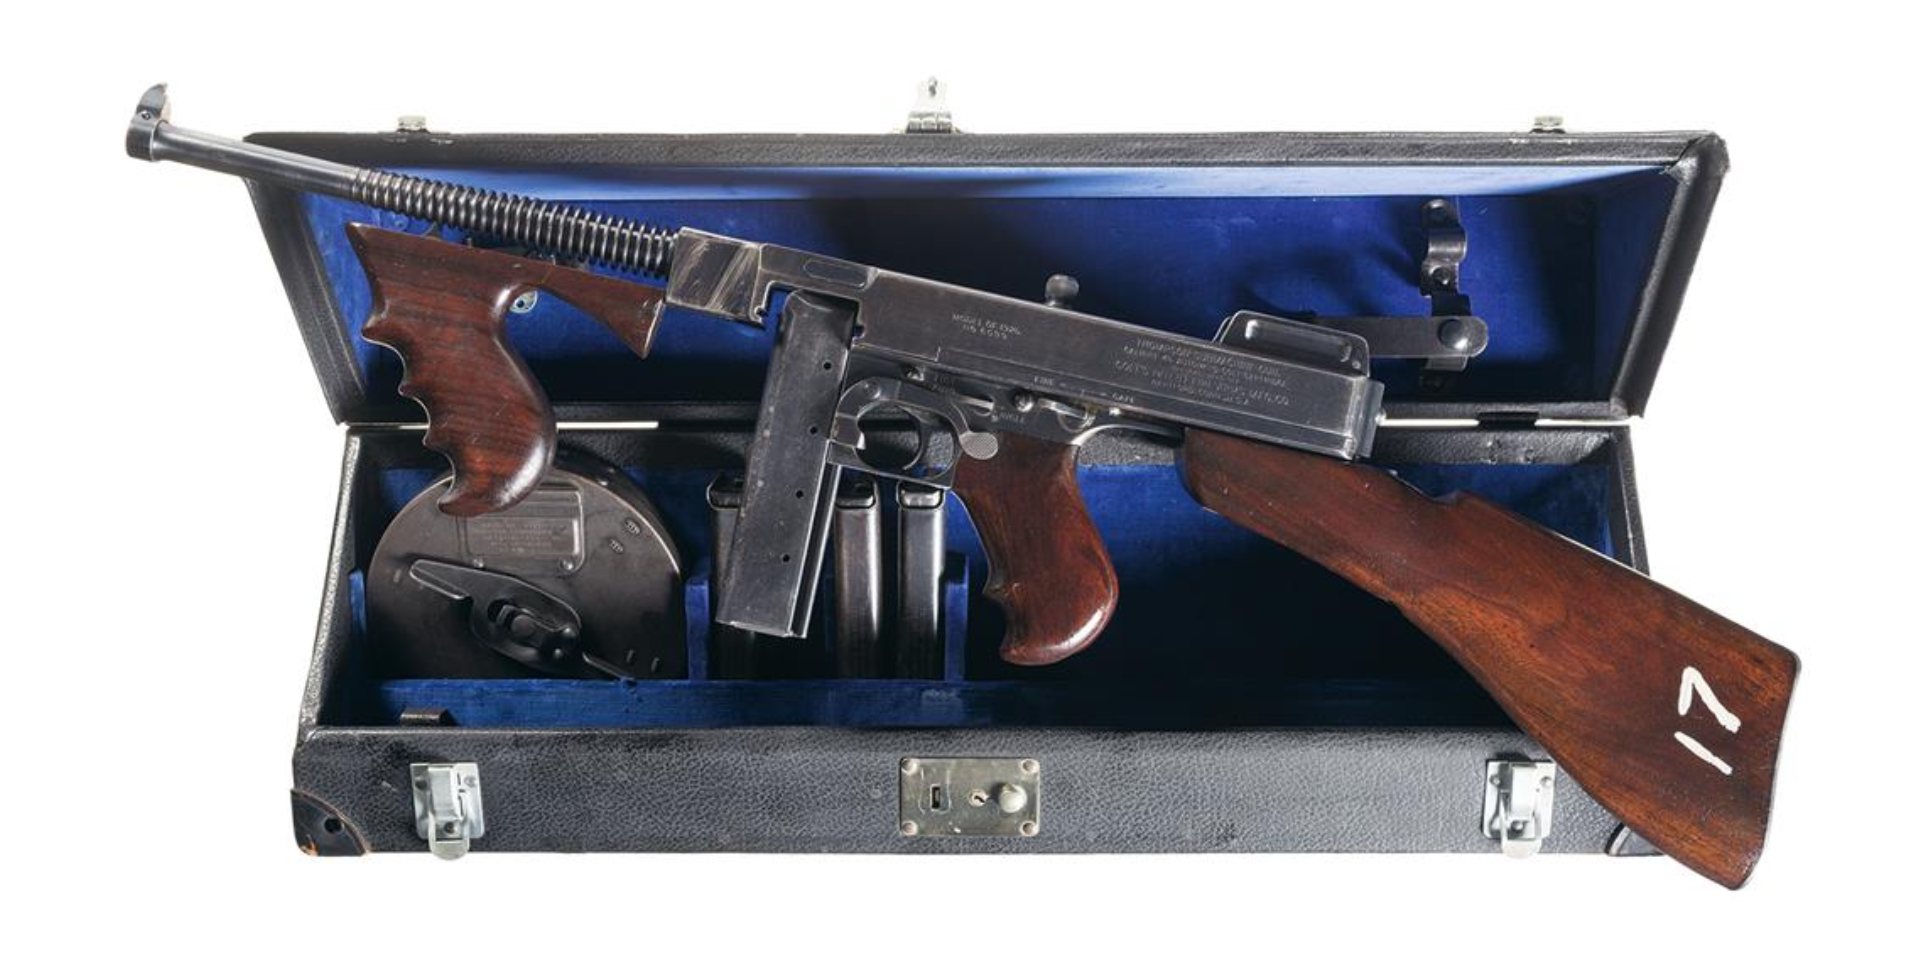 Thompson submachine gun in a case.